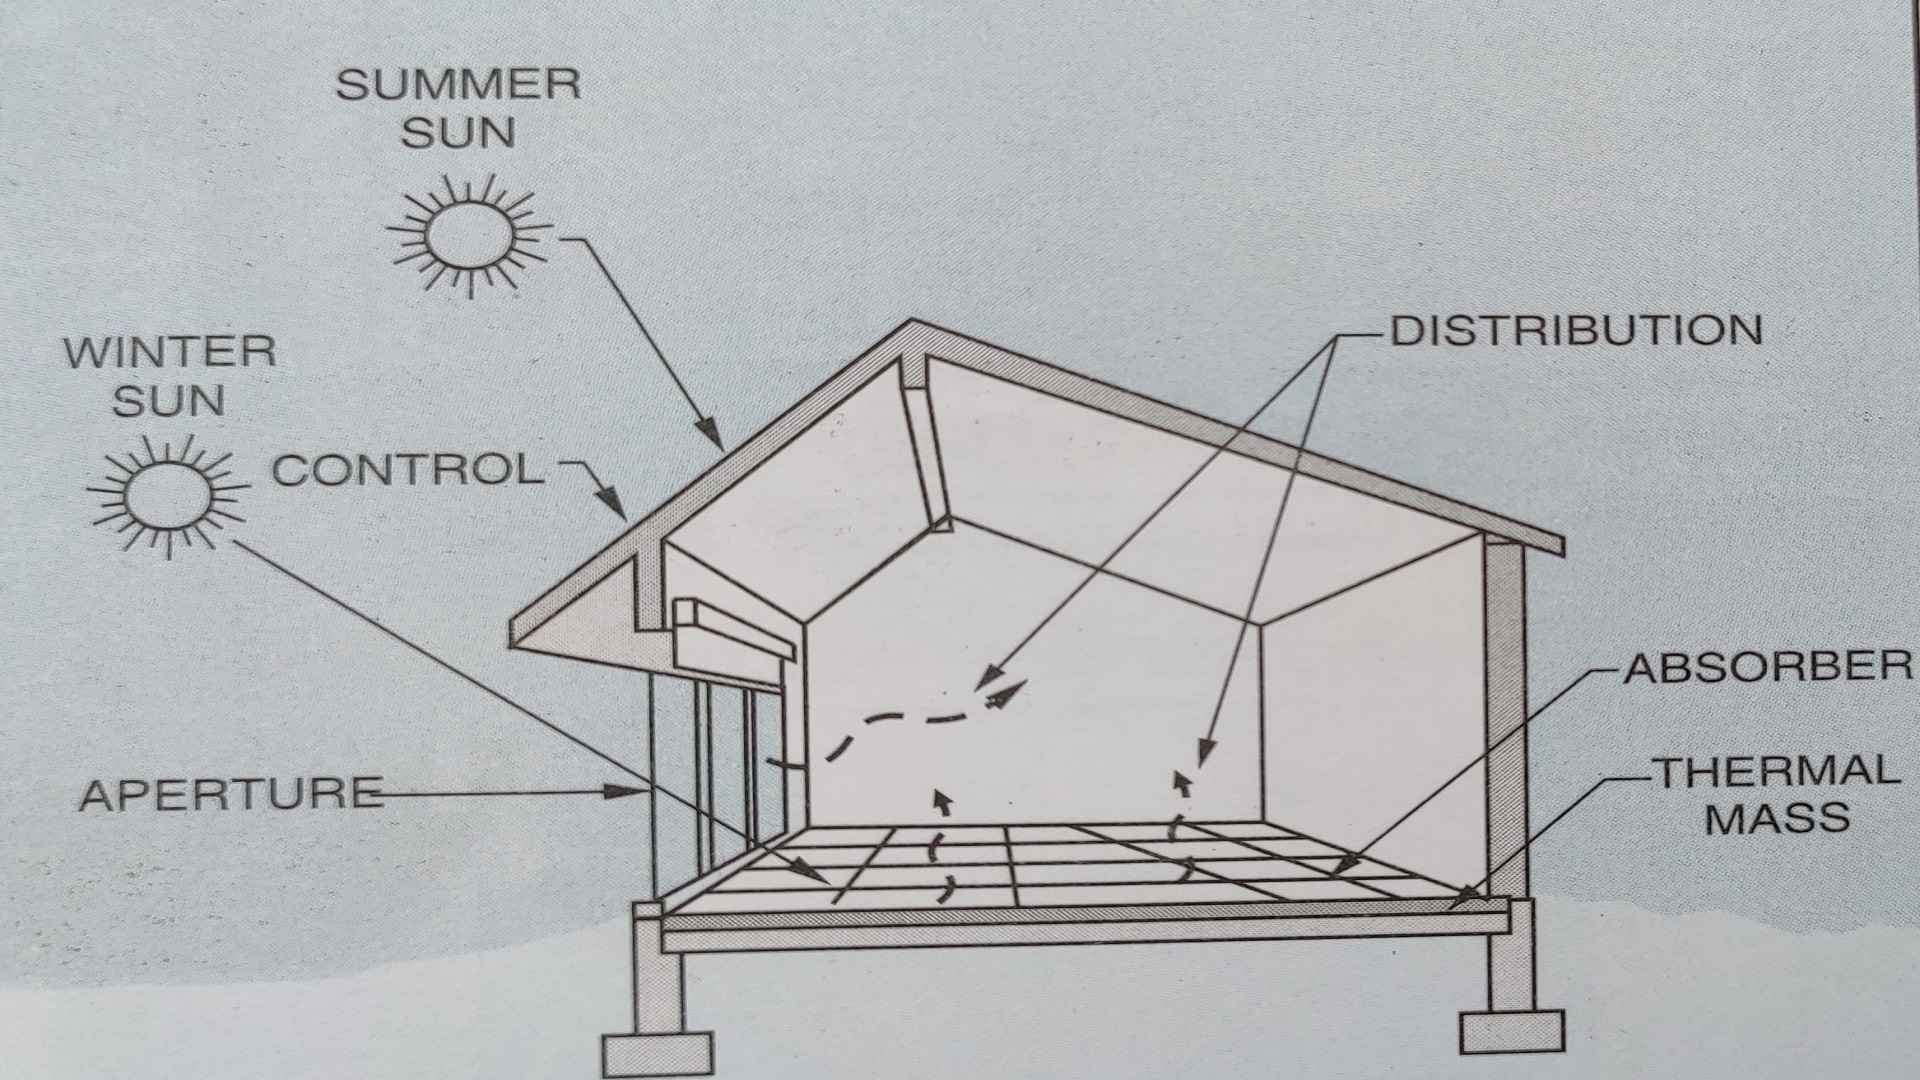 Elements of passive solar design